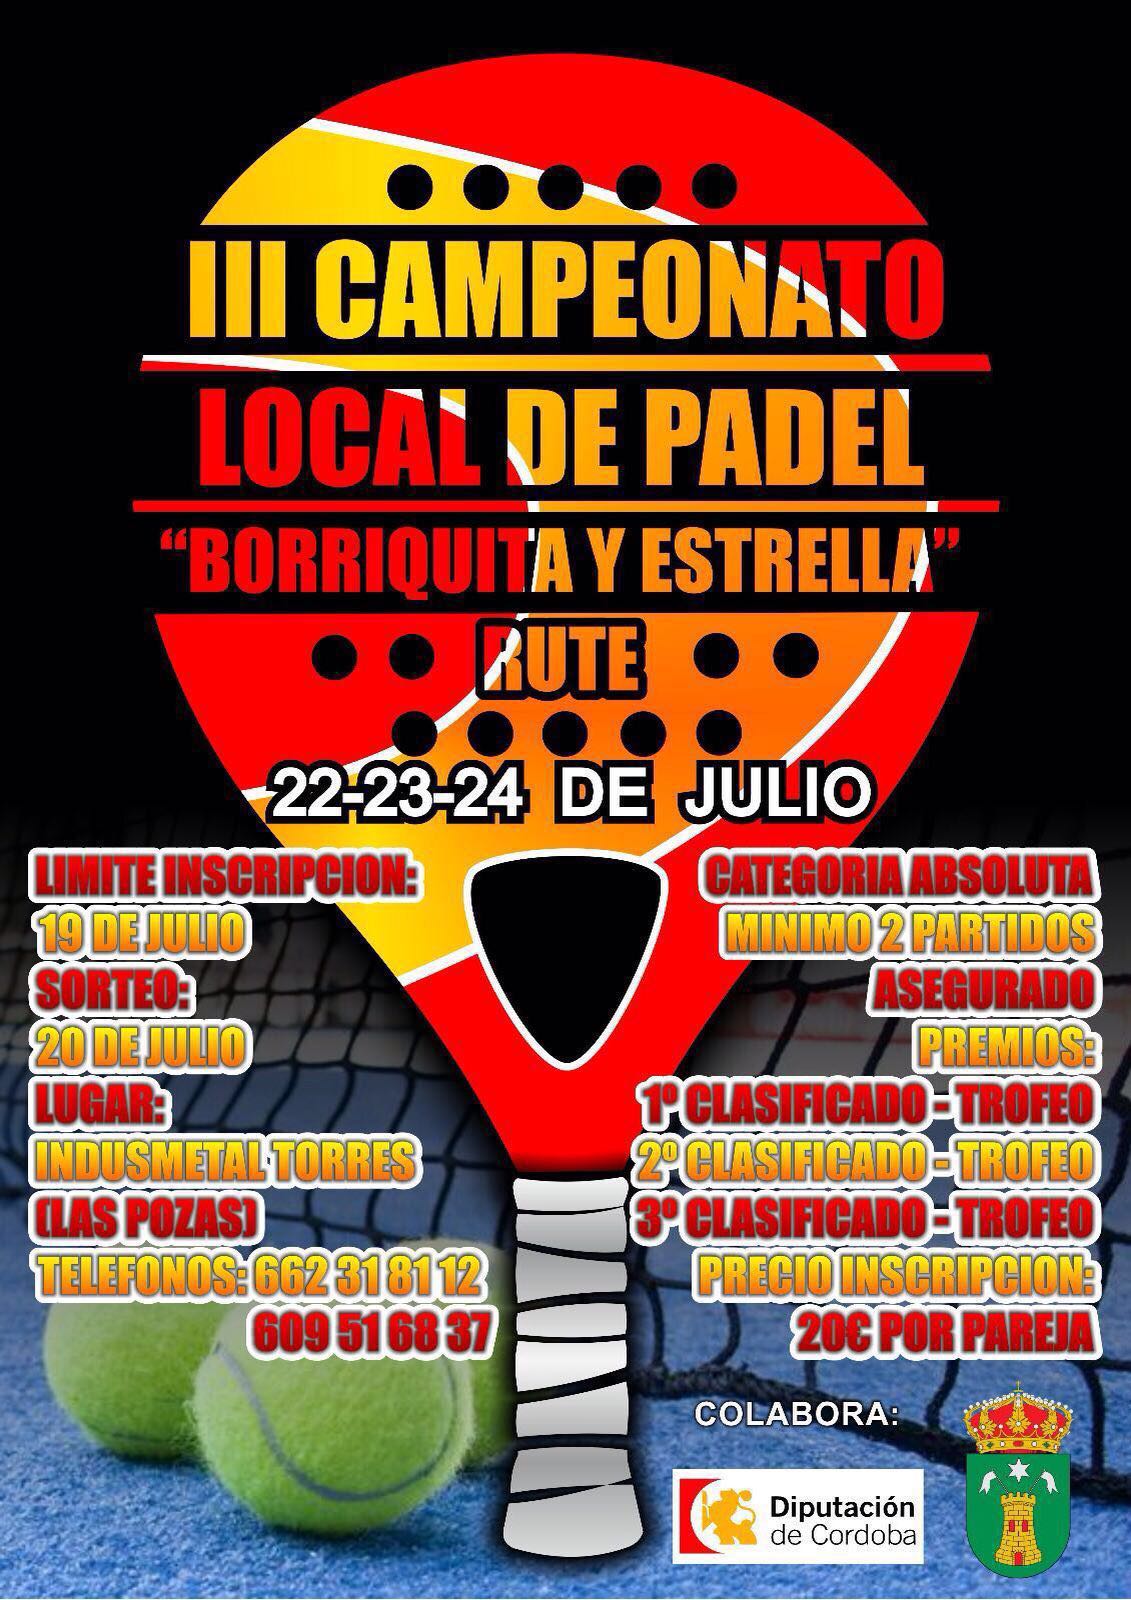 Campeonato Padel La Borriquita